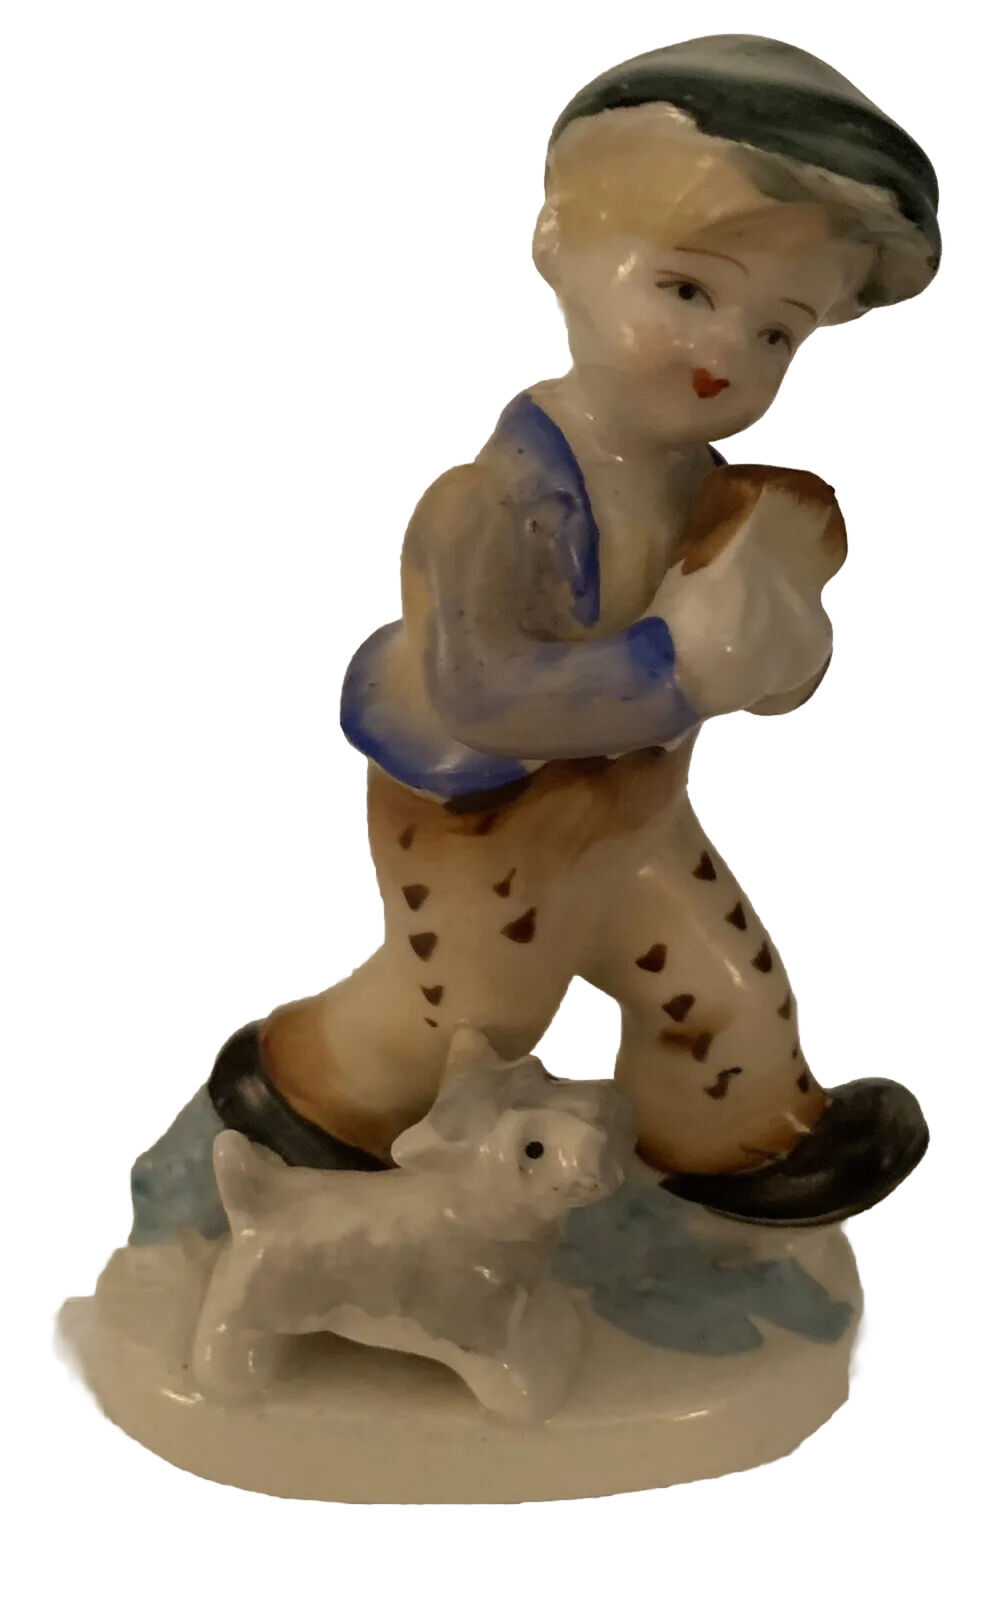 Vintage Boy Blue Cap Carrying Bread Walking with Dog Ceramic Figurine 5